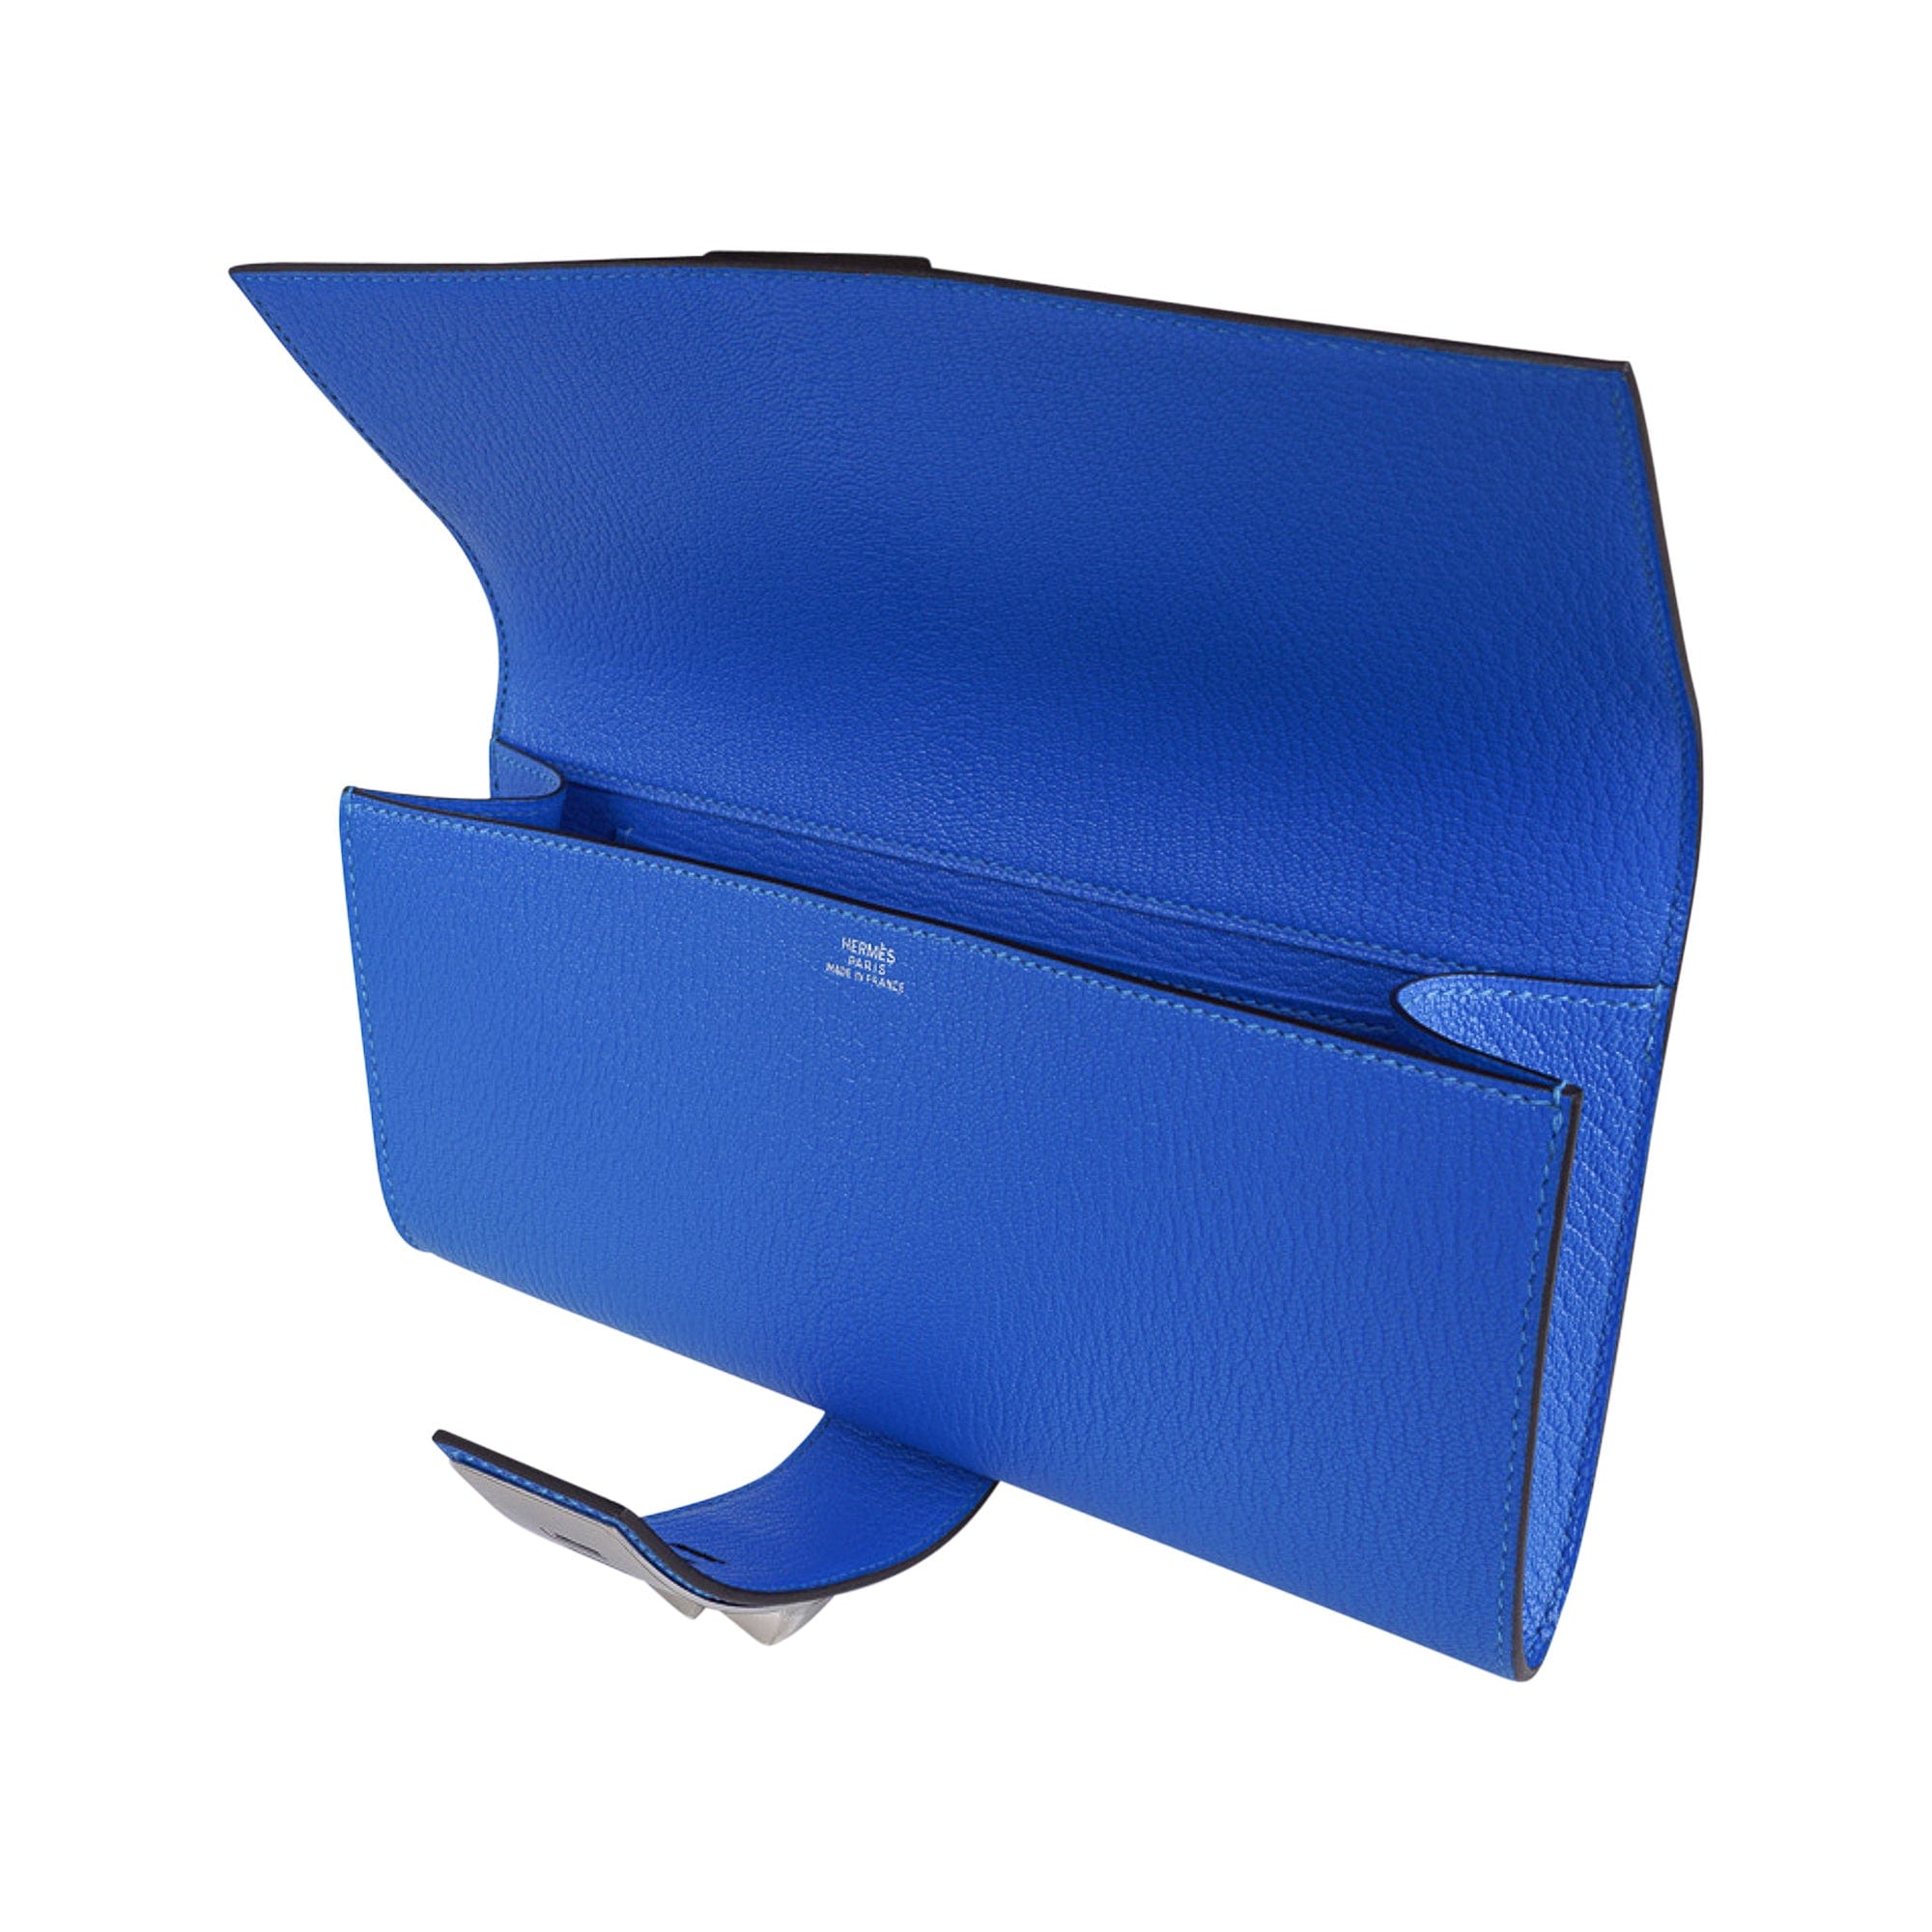 New Hermes Medor 23 Clutch Bleu Electrique Chevre Mysore blue electric  Purse Bag